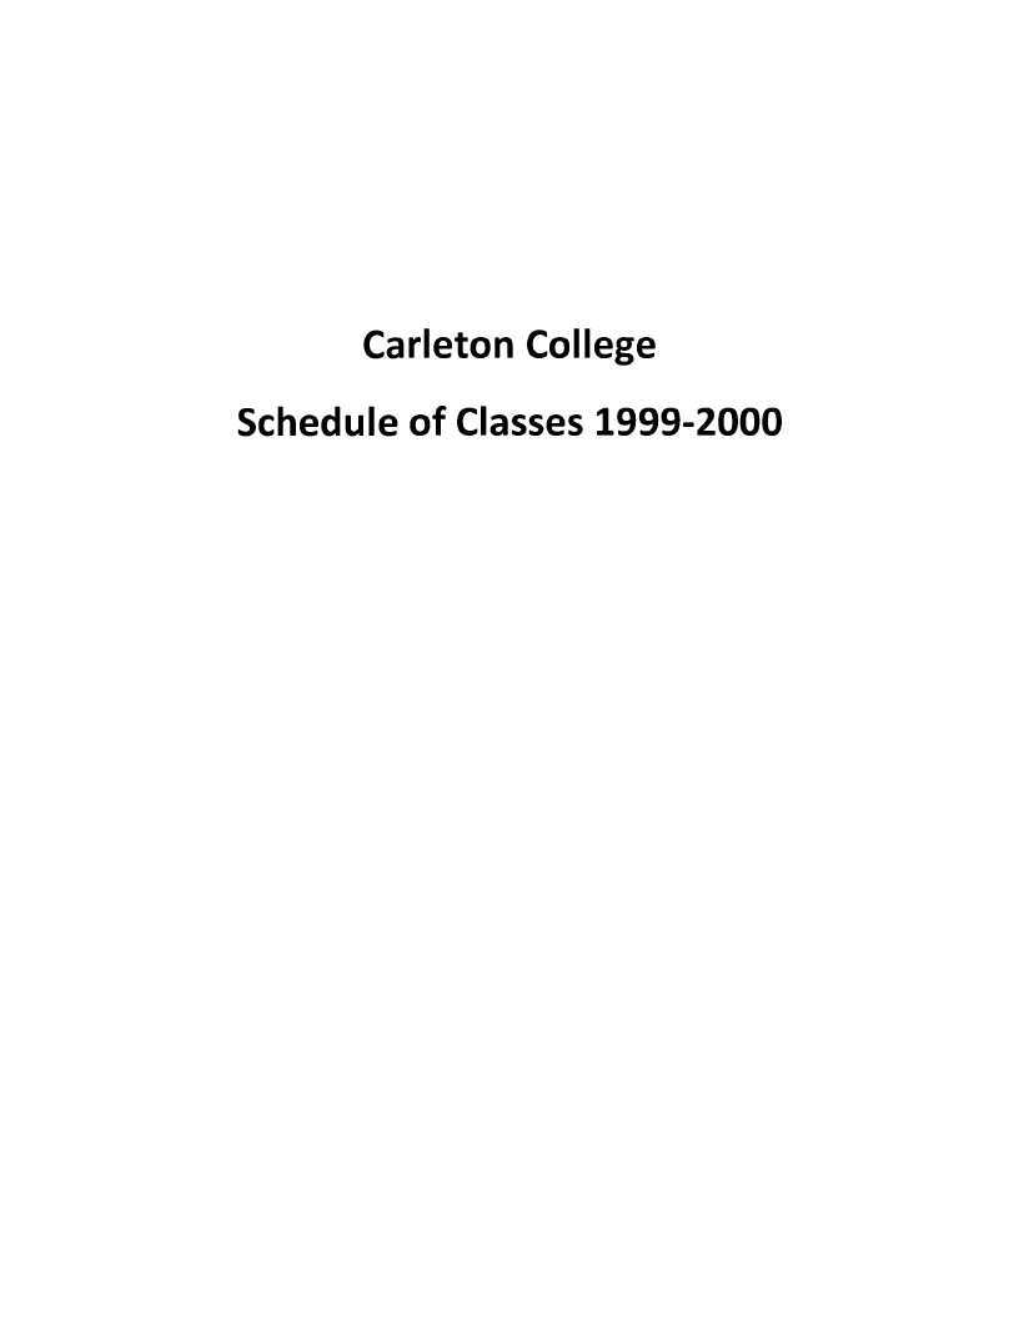 Carleton College Schedule of Classes 1999-2000